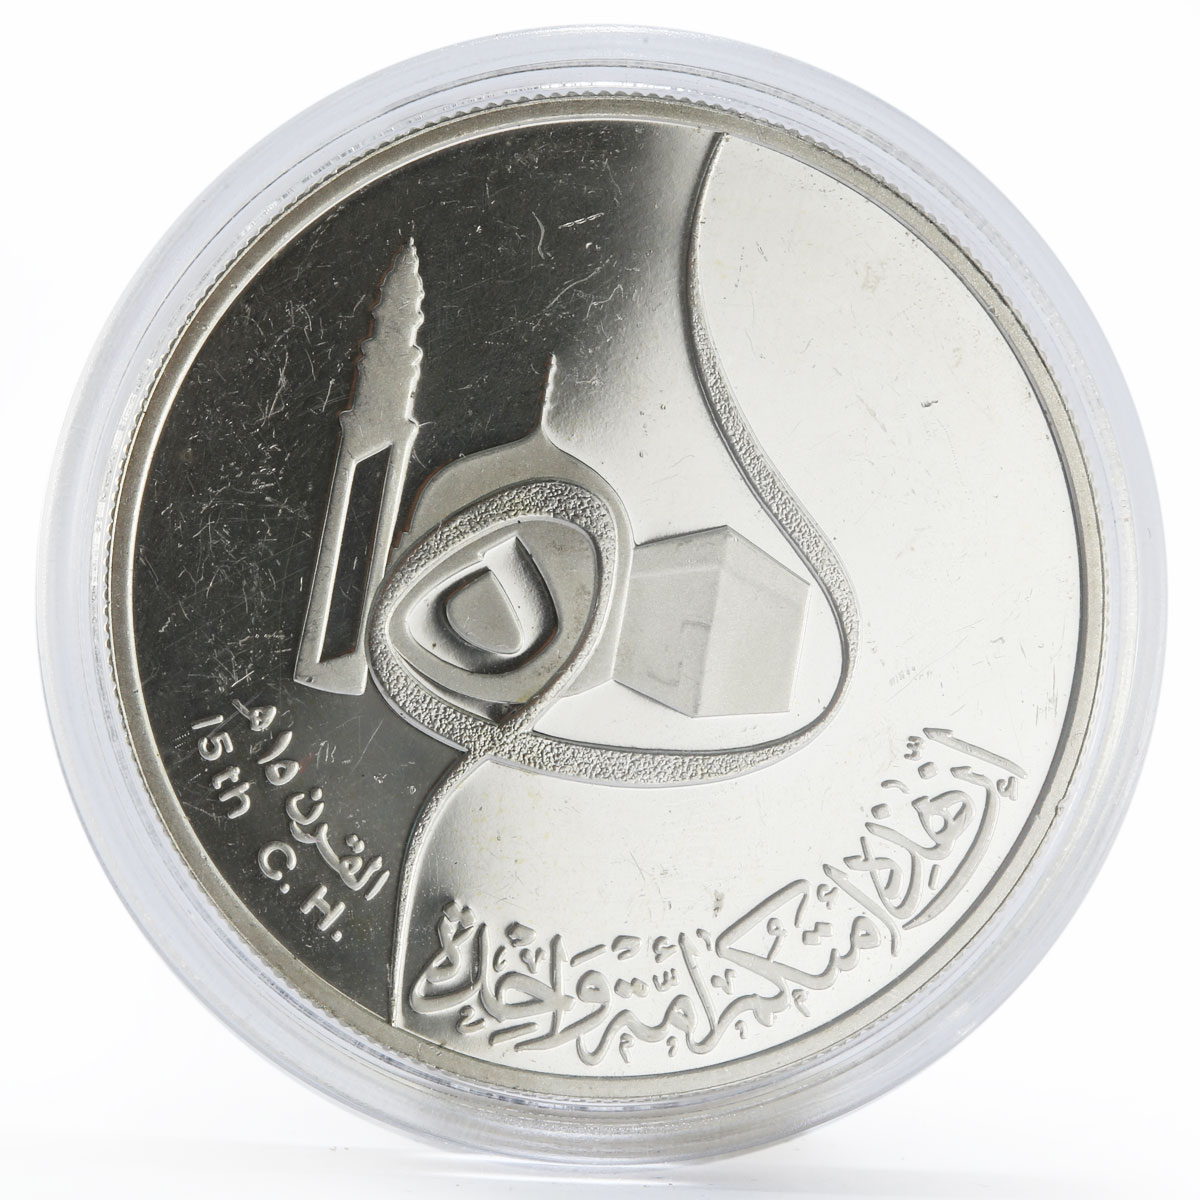 Iraq 1 dinar 1400th Anniversary of Hijra silver coin 1980